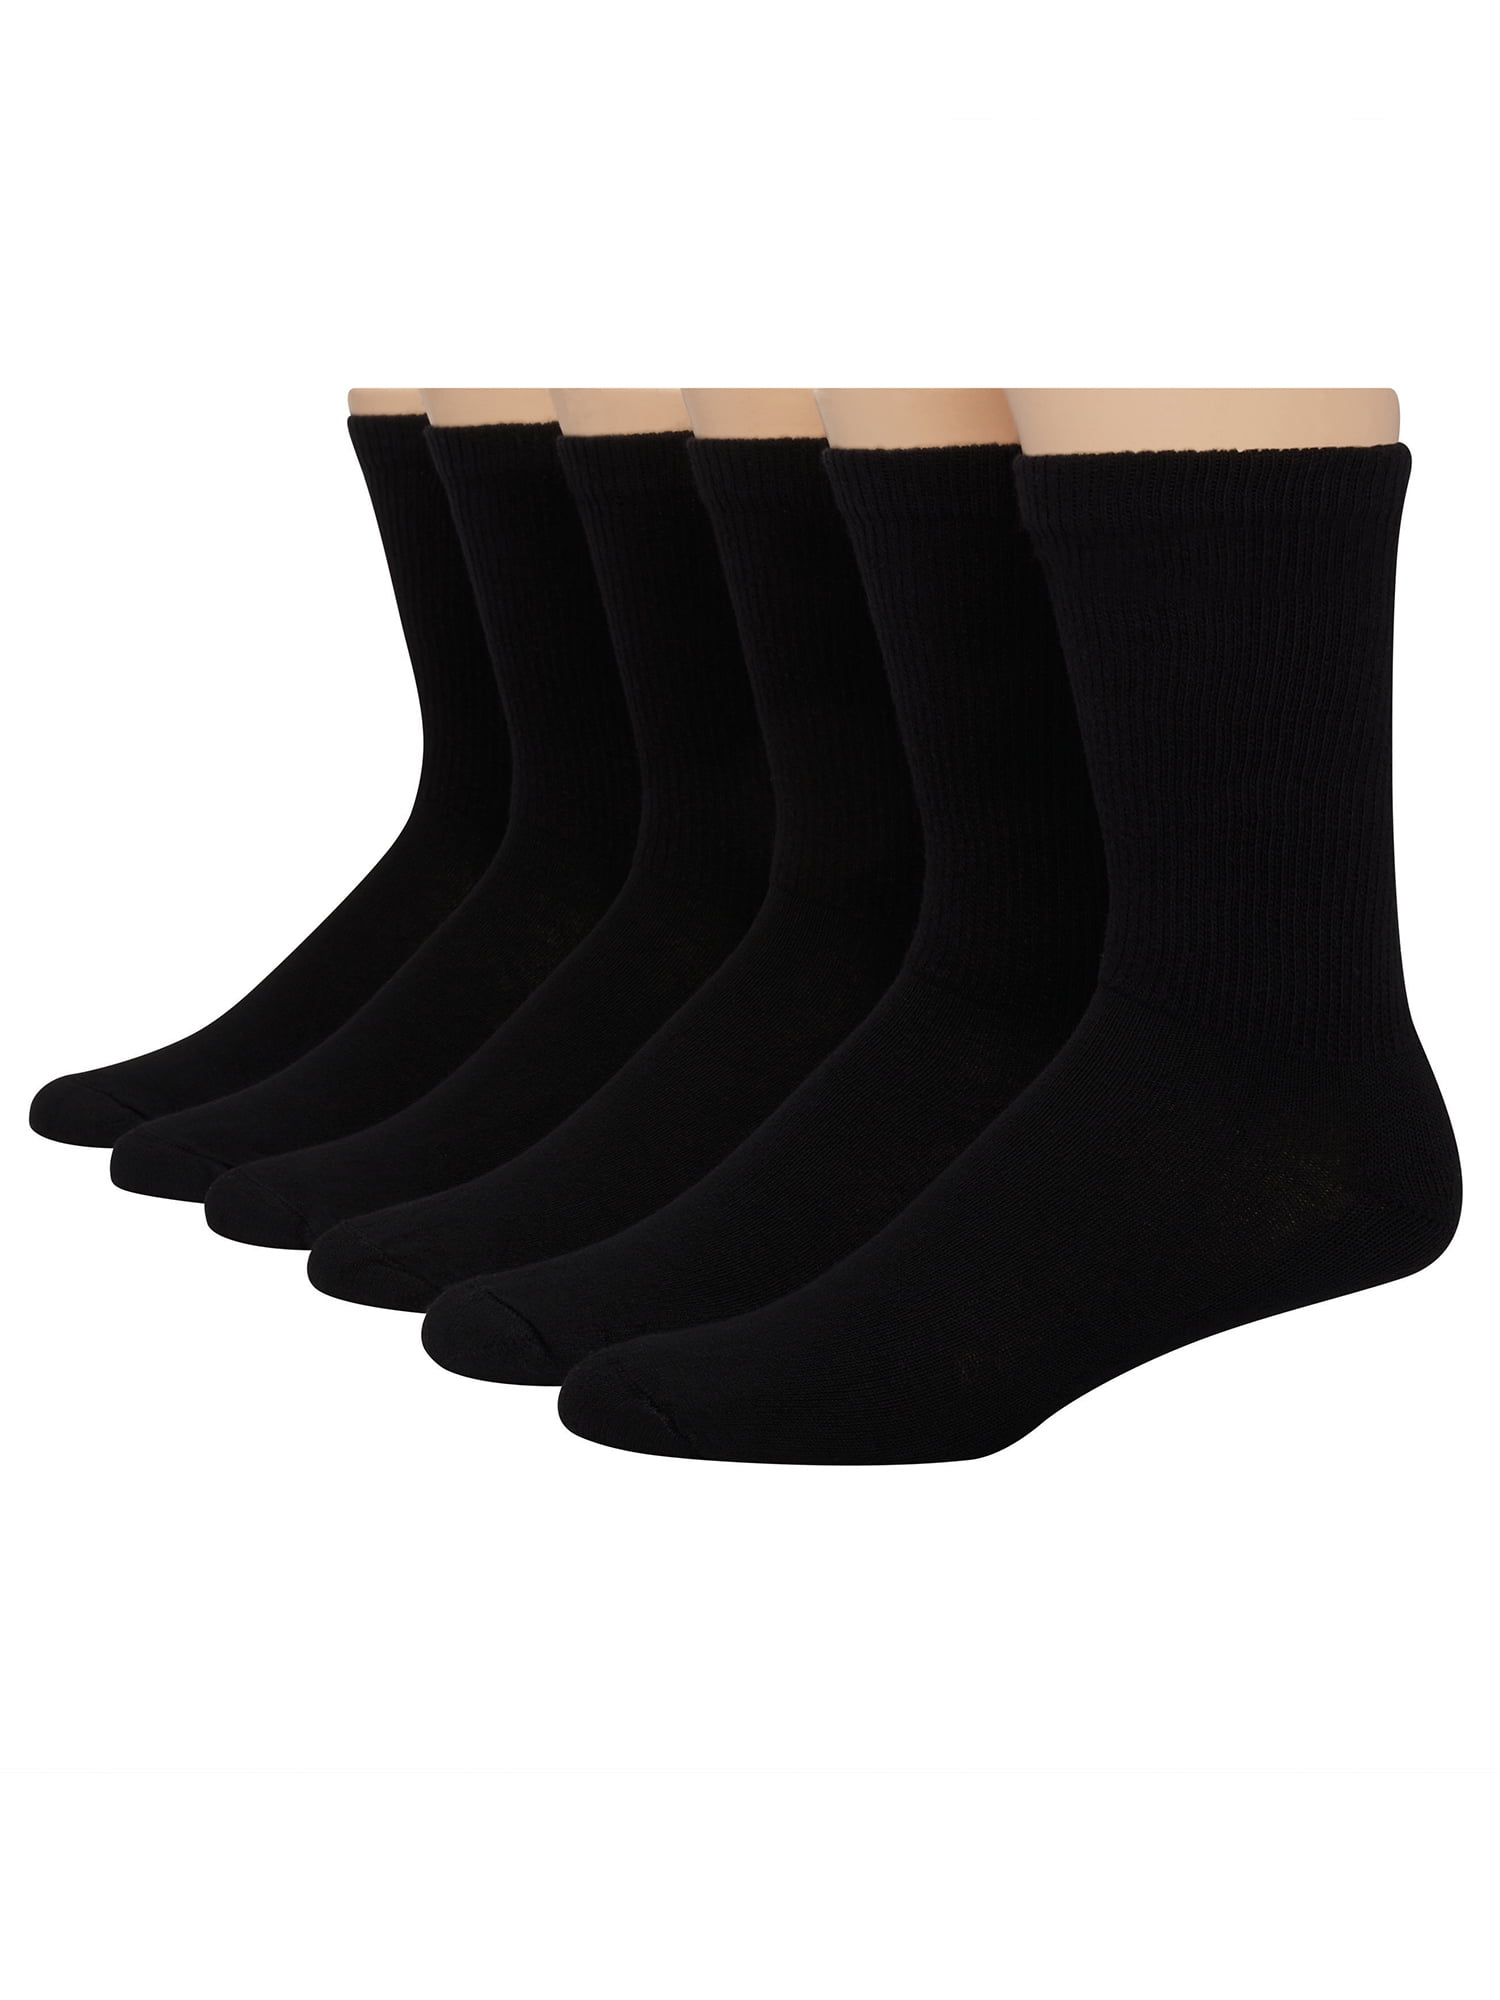 Men's ComfortSoft Cushion Crew Socks, 6 Pack - Walmart.com